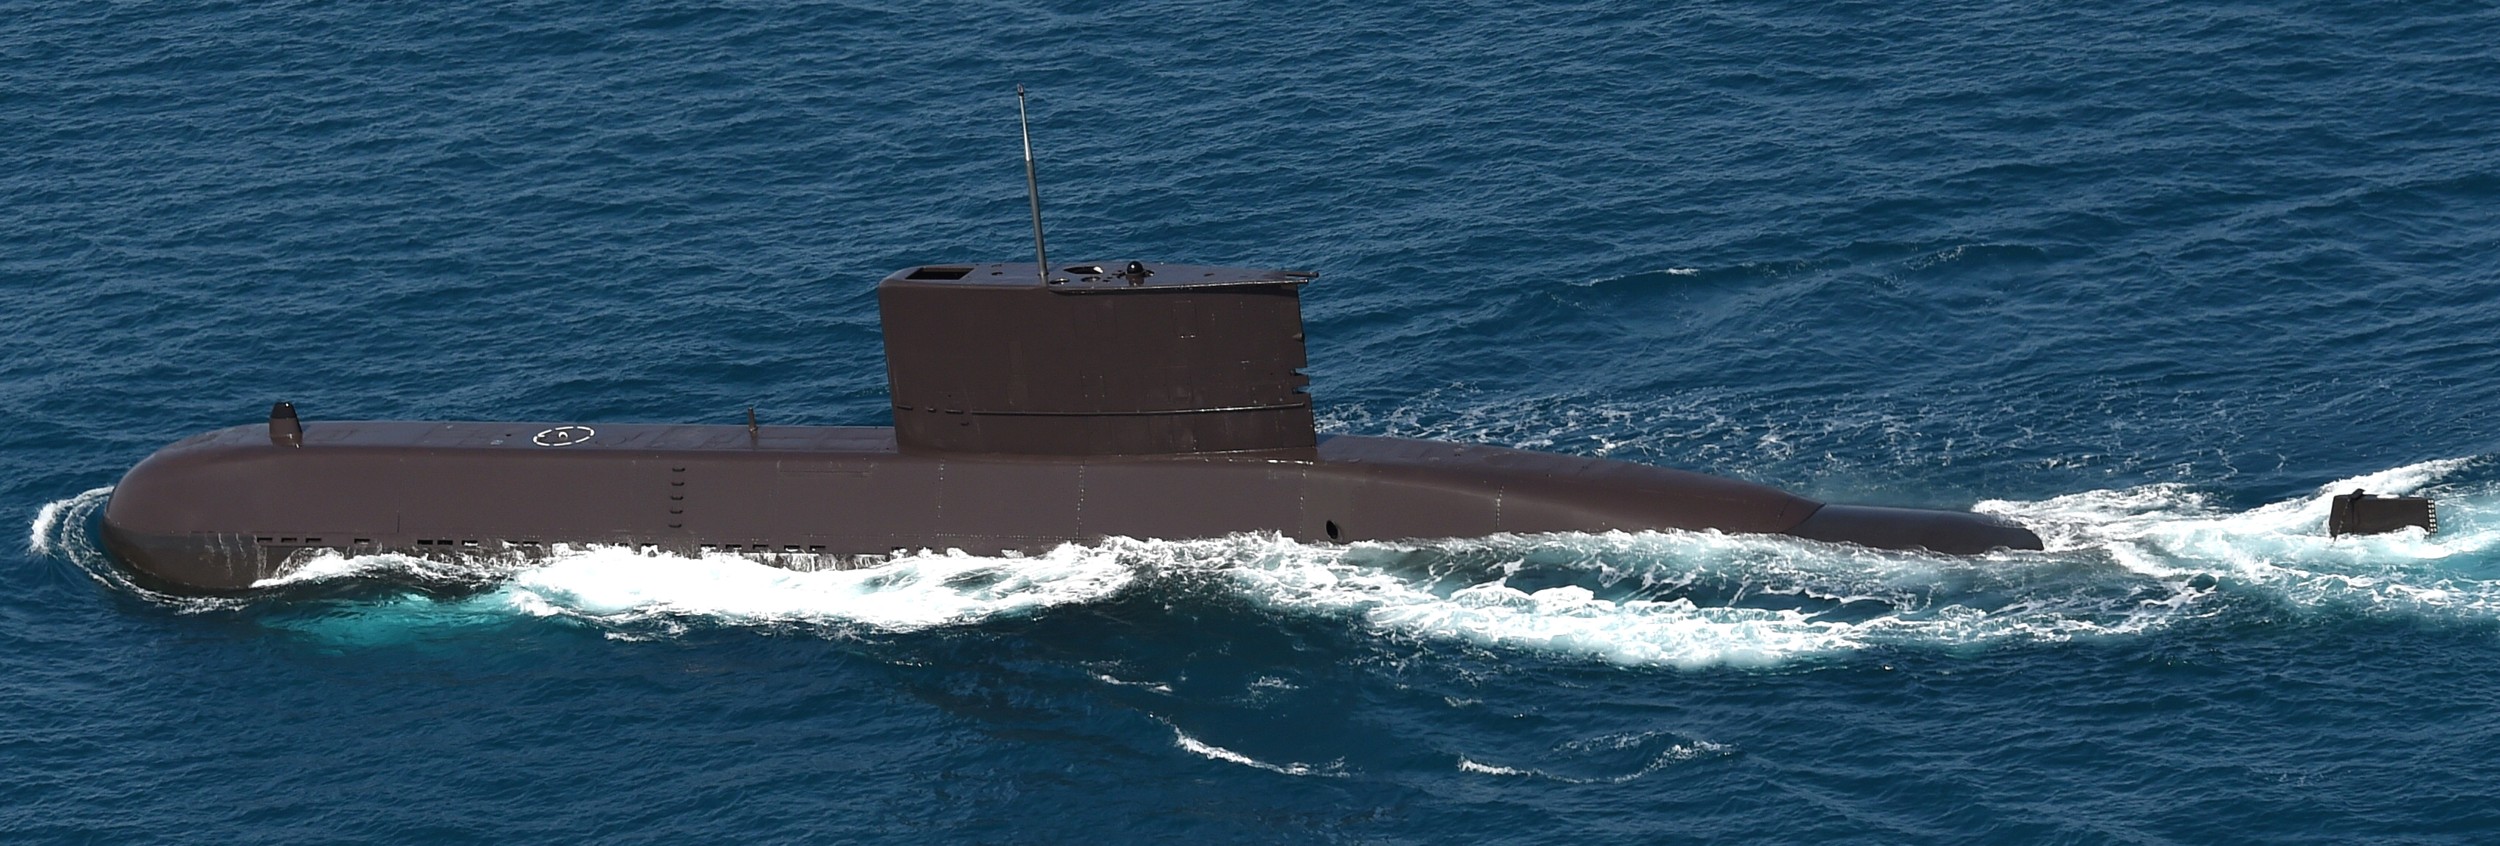 jang bogo class submarine ss roks republic of korea navy rokn daewoo dsme 533mm torpedo sut ugm-84 harpoon ssm missile 02c